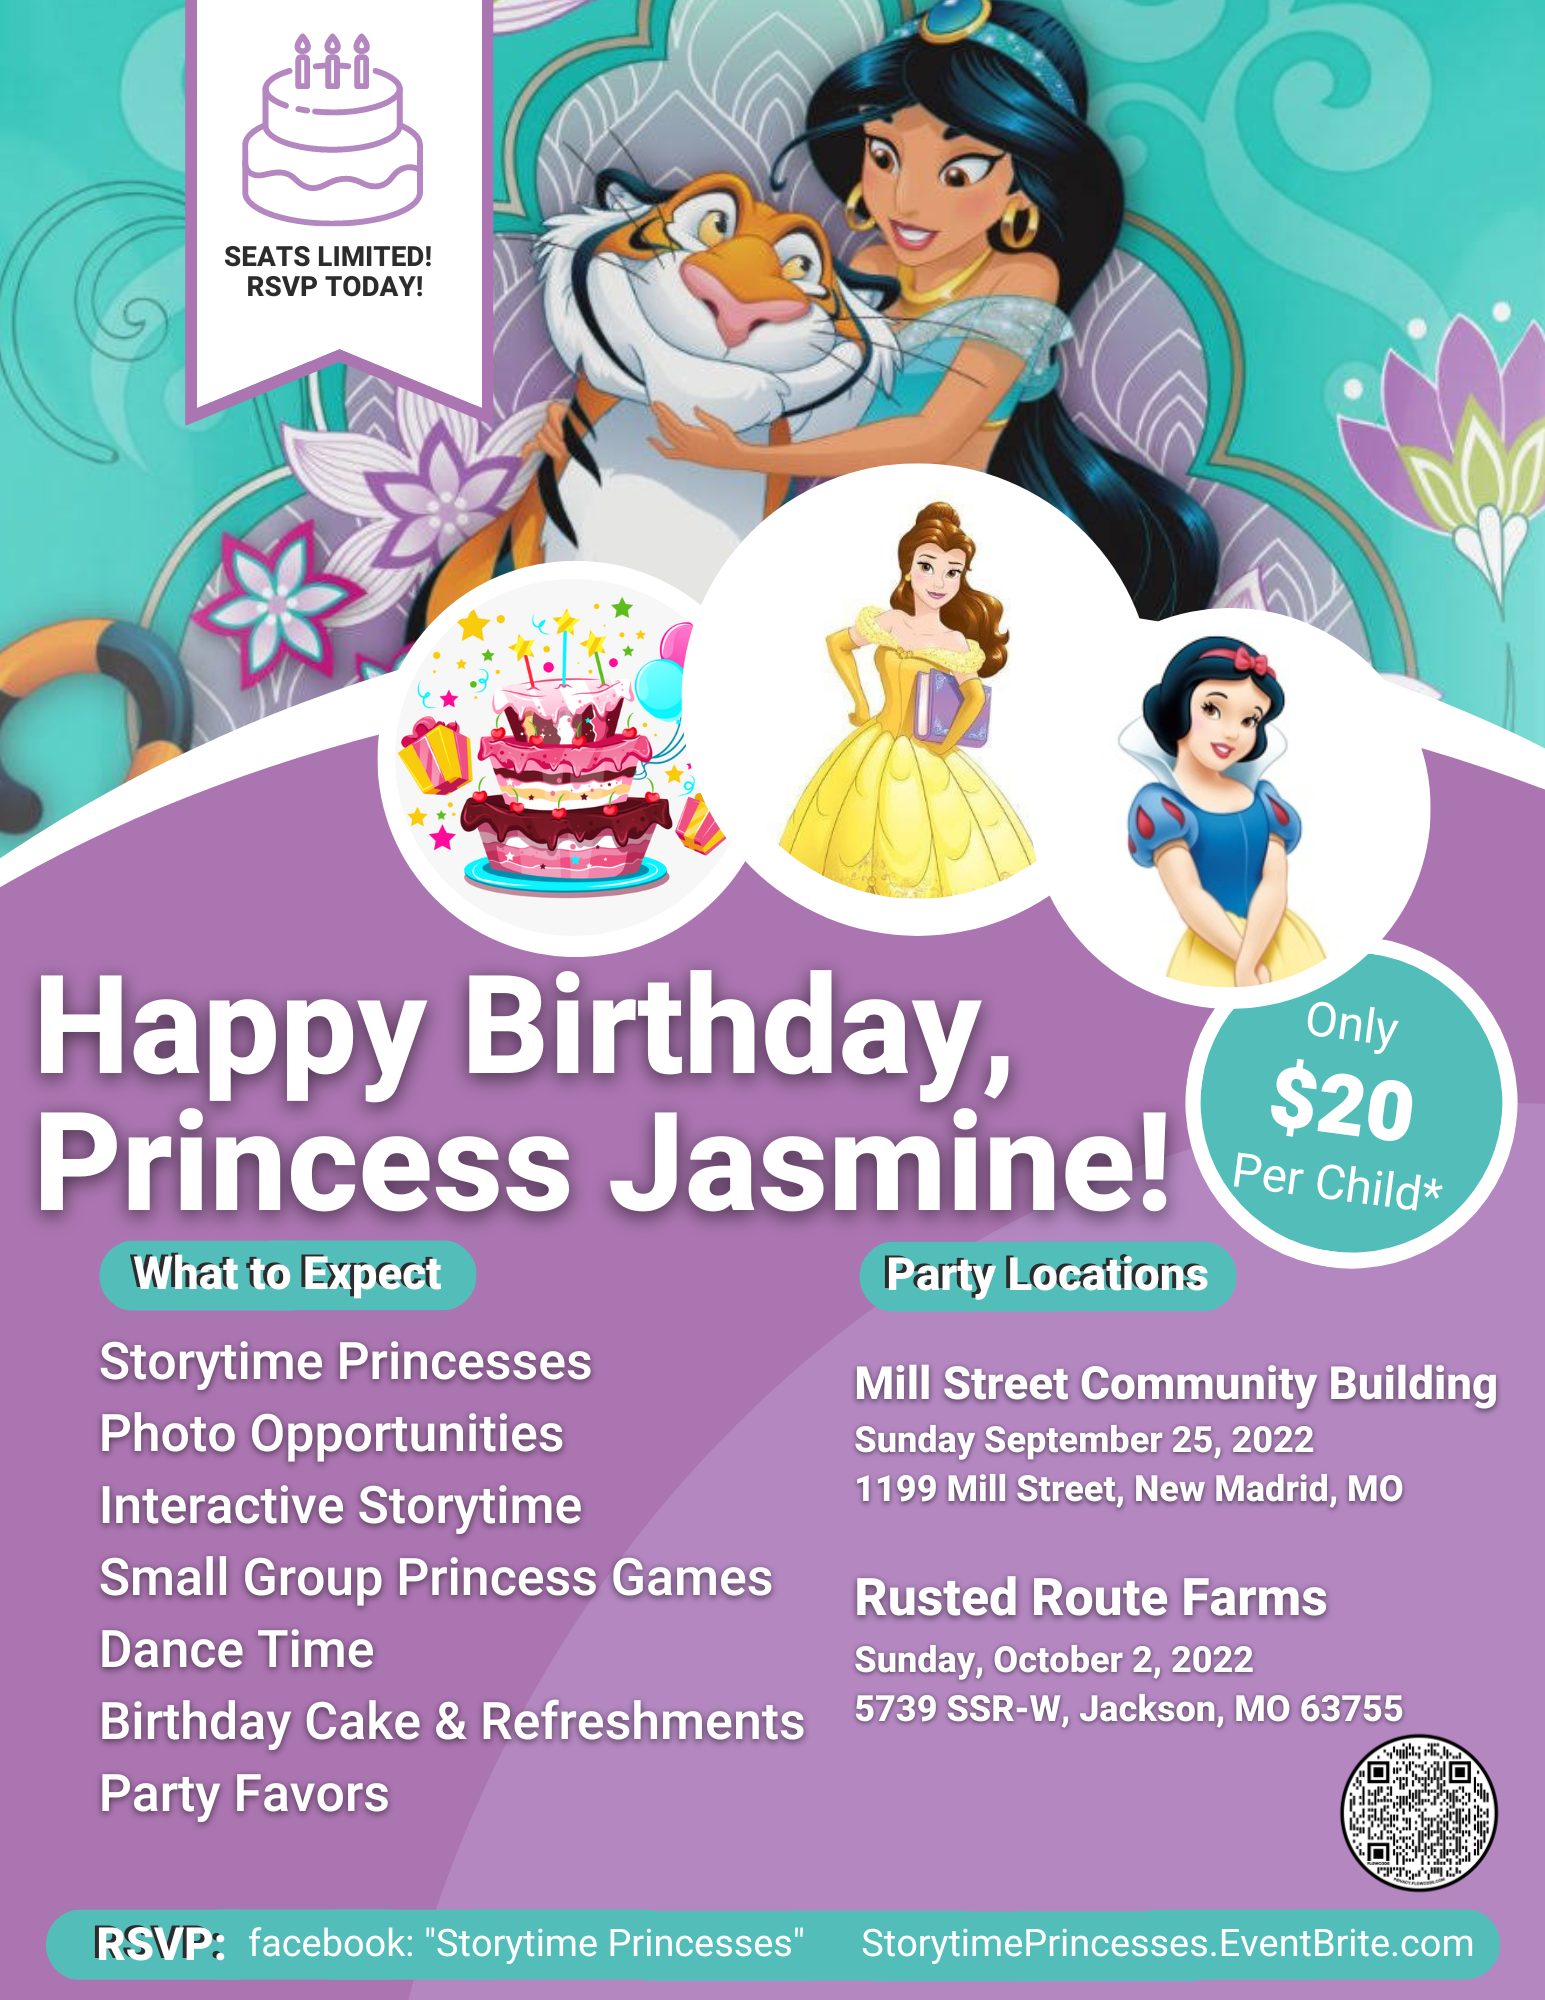 Jasmine's Birthday Fly (6) (1)